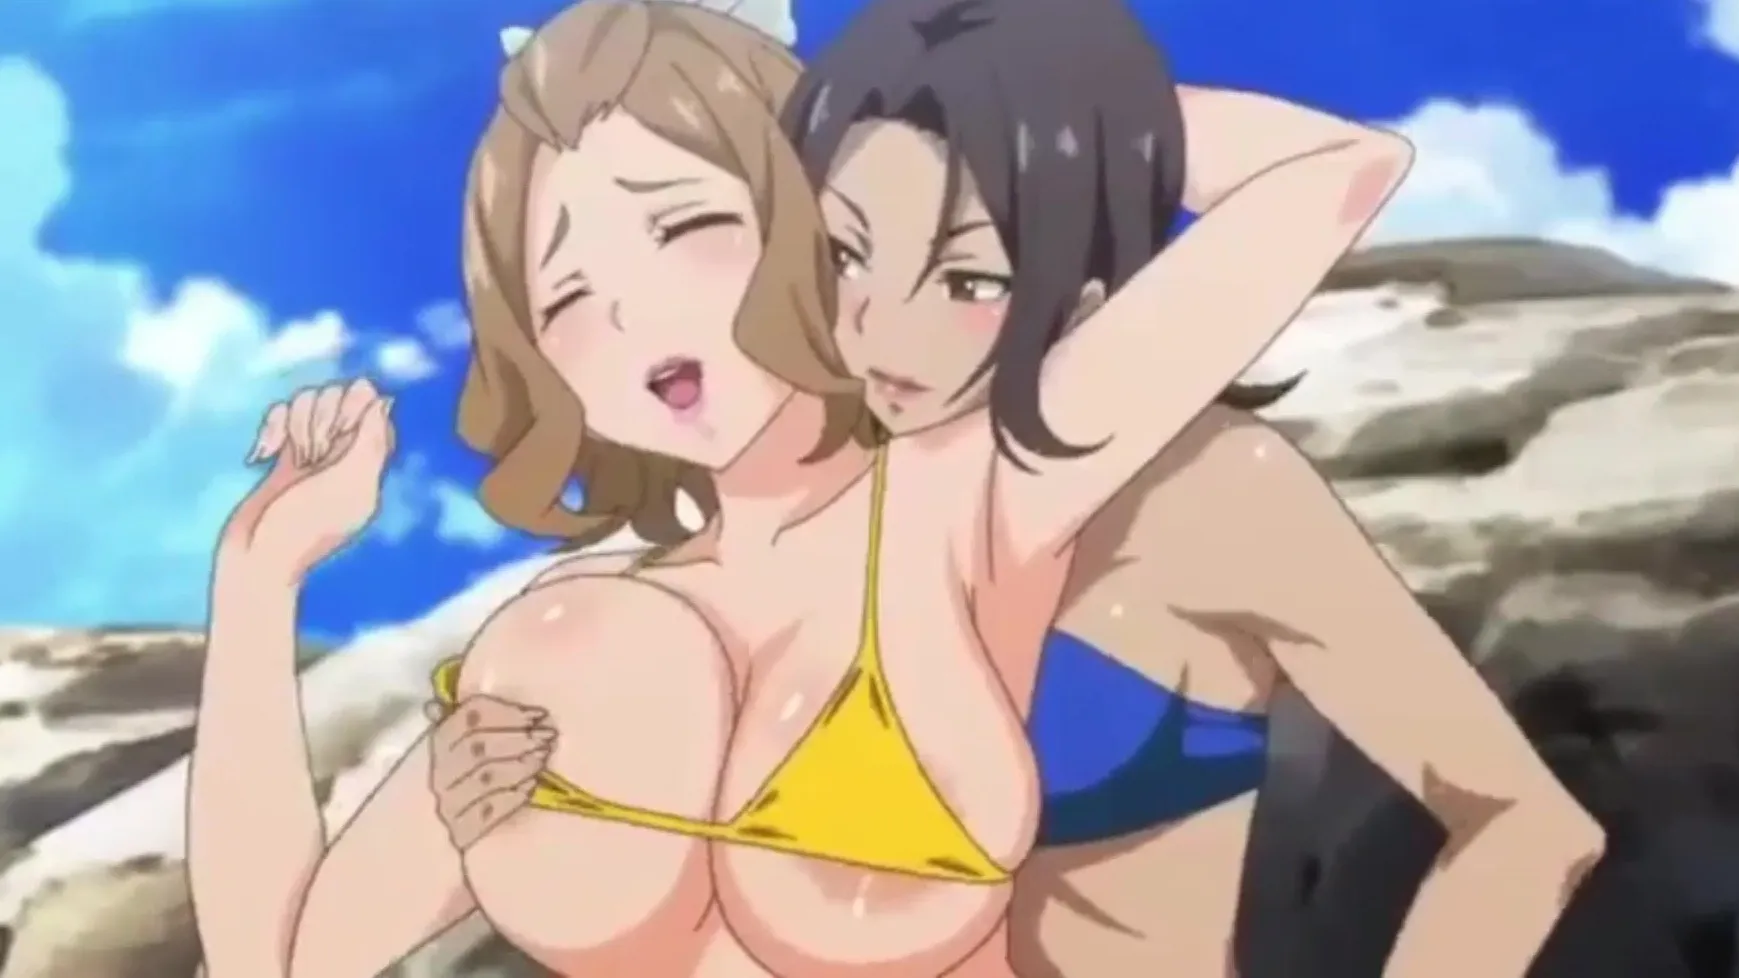 Big tit lesbian anime